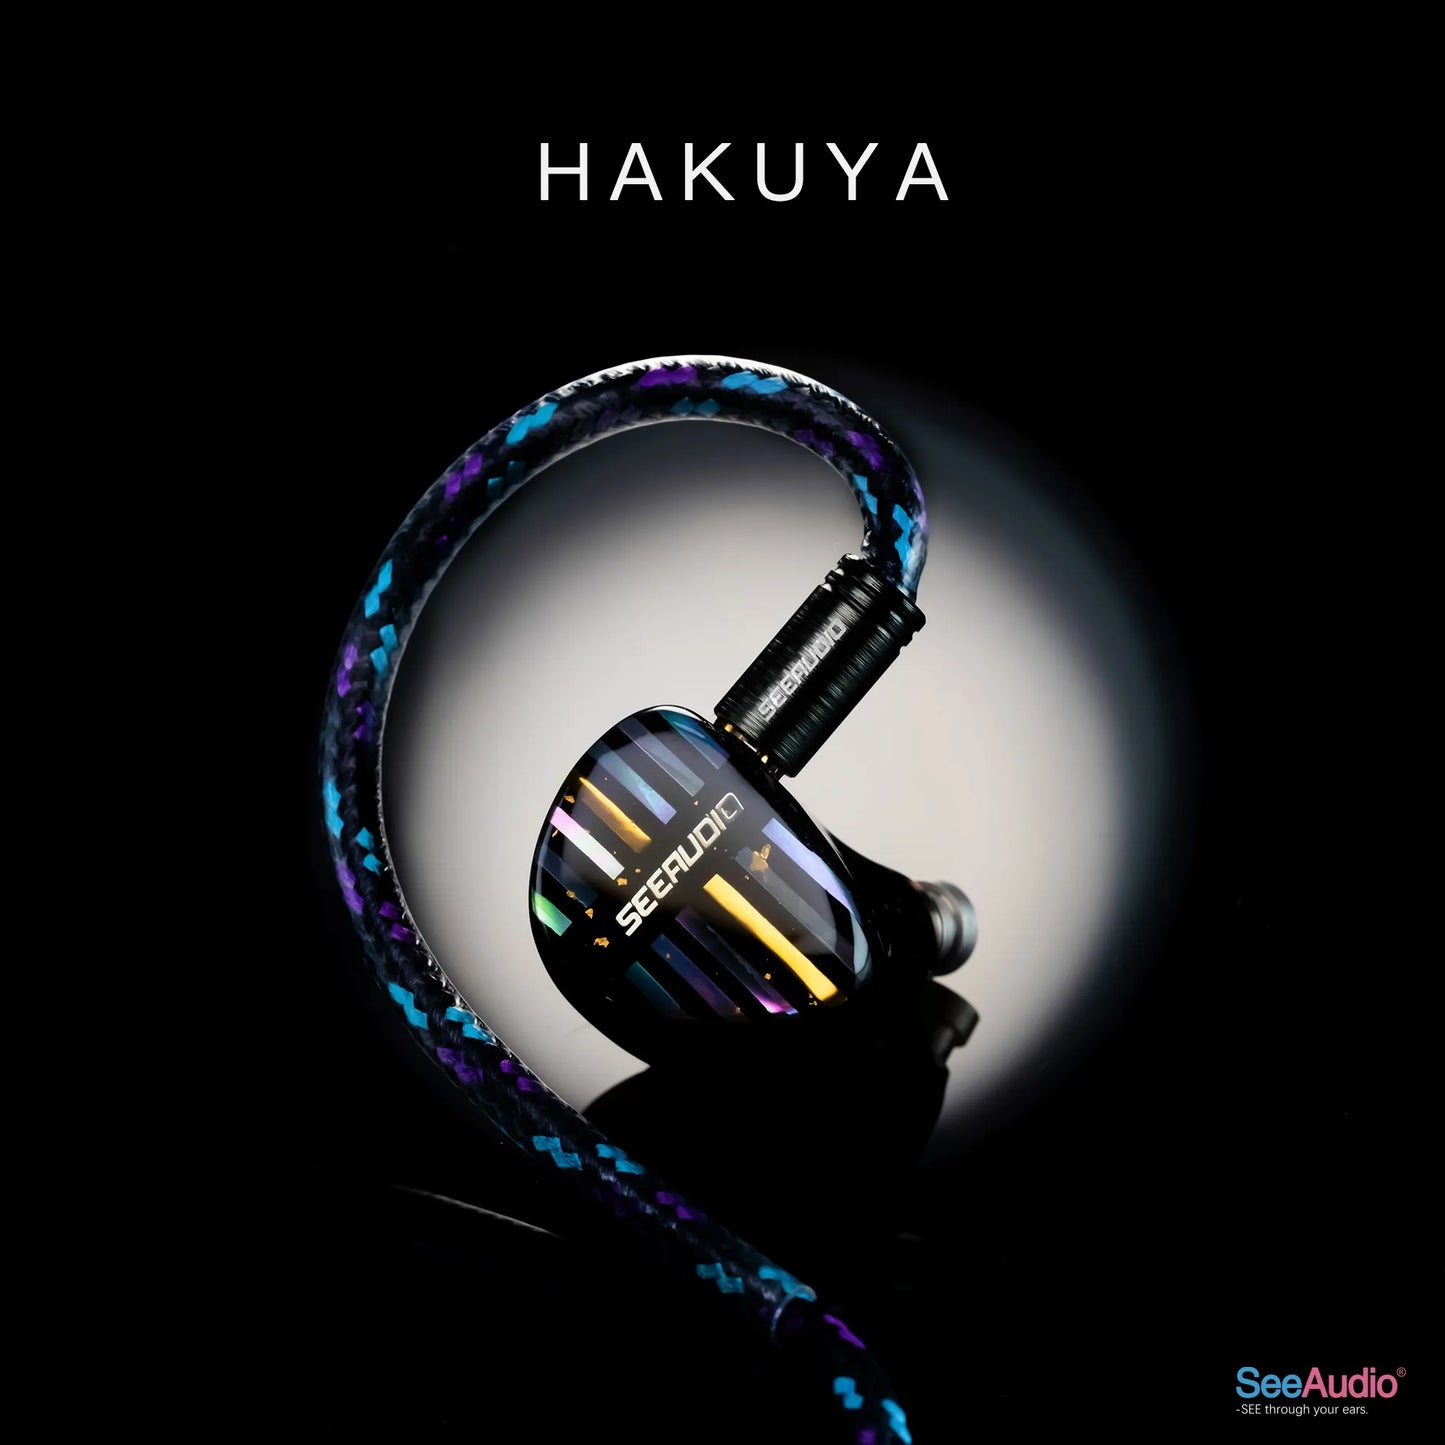 SeeAudio HAKUYA 10BA + 4EST Hybrid Driver Hifi In-Ear Headphones IEM - The HiFi Cat